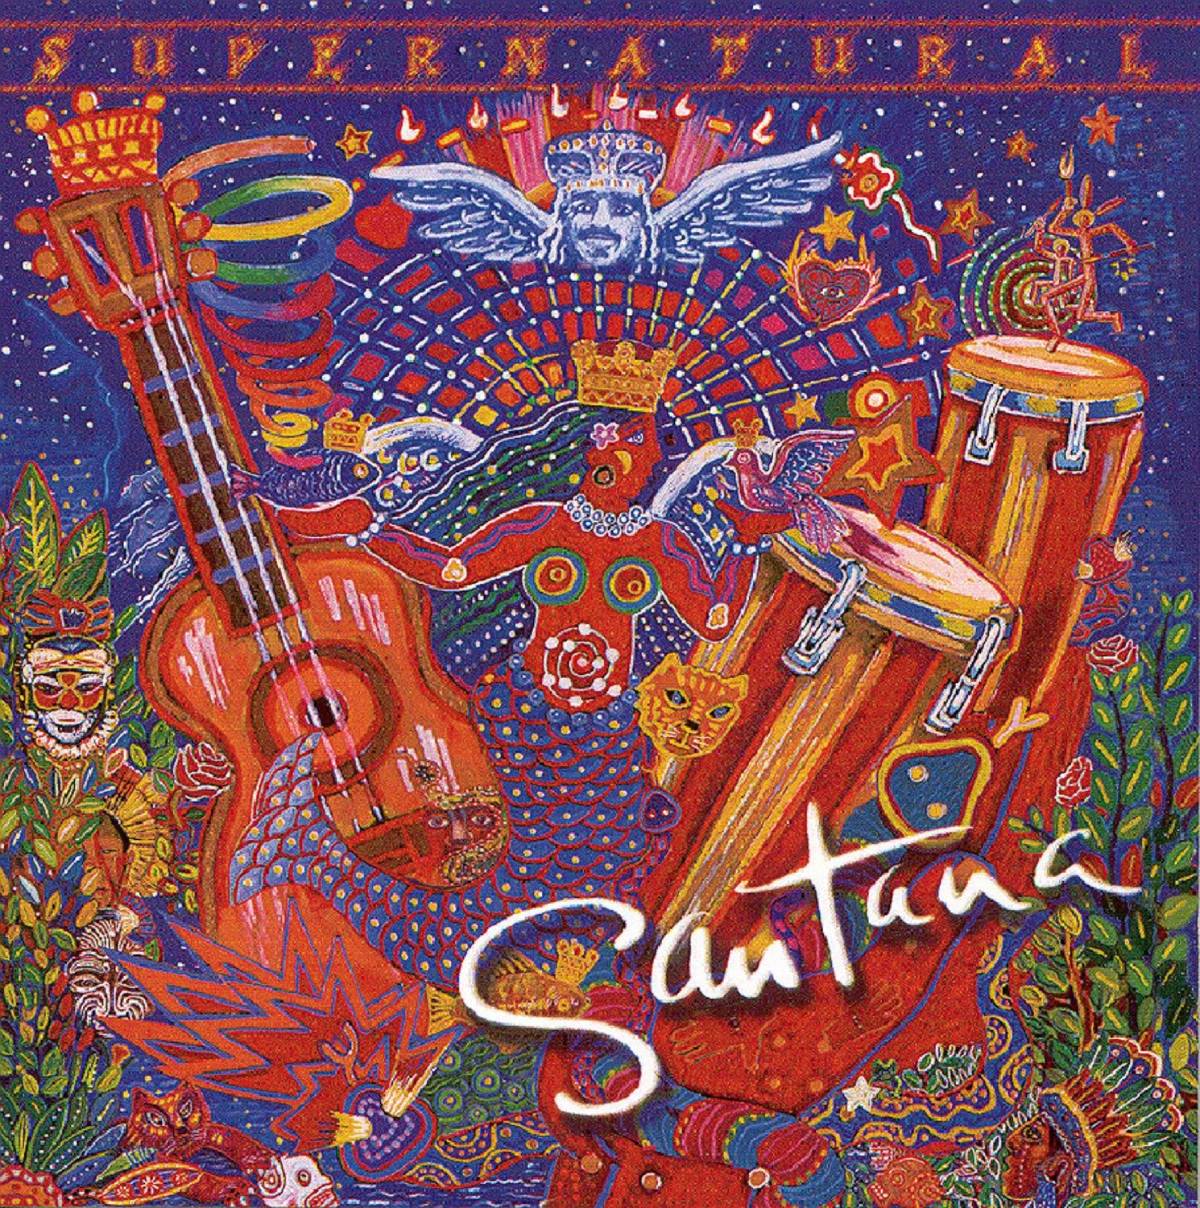 Santana - "Supernatural"